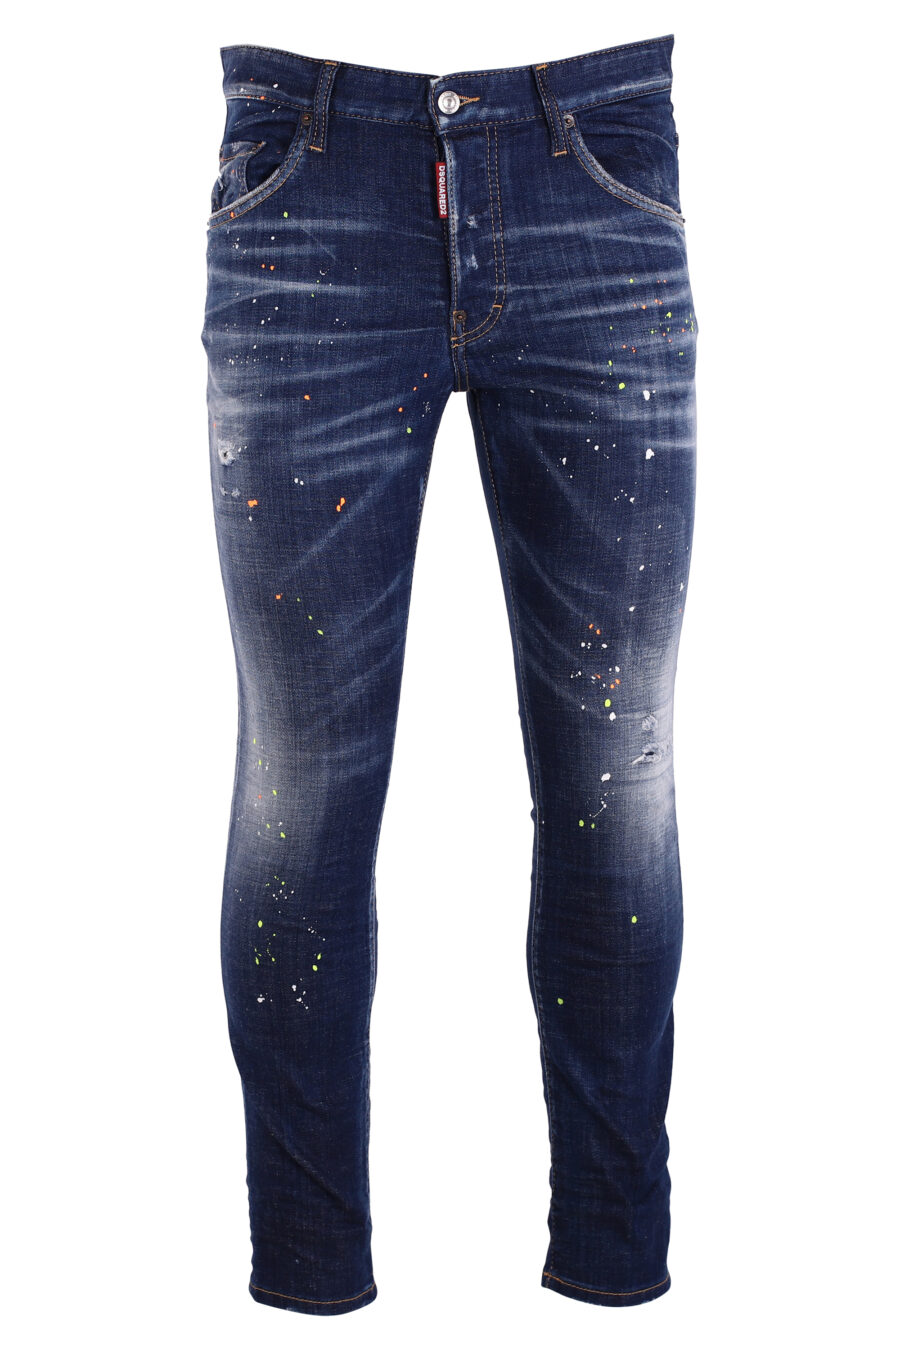 Jeans "skater jean" blue with white paint splash - IMG 8993